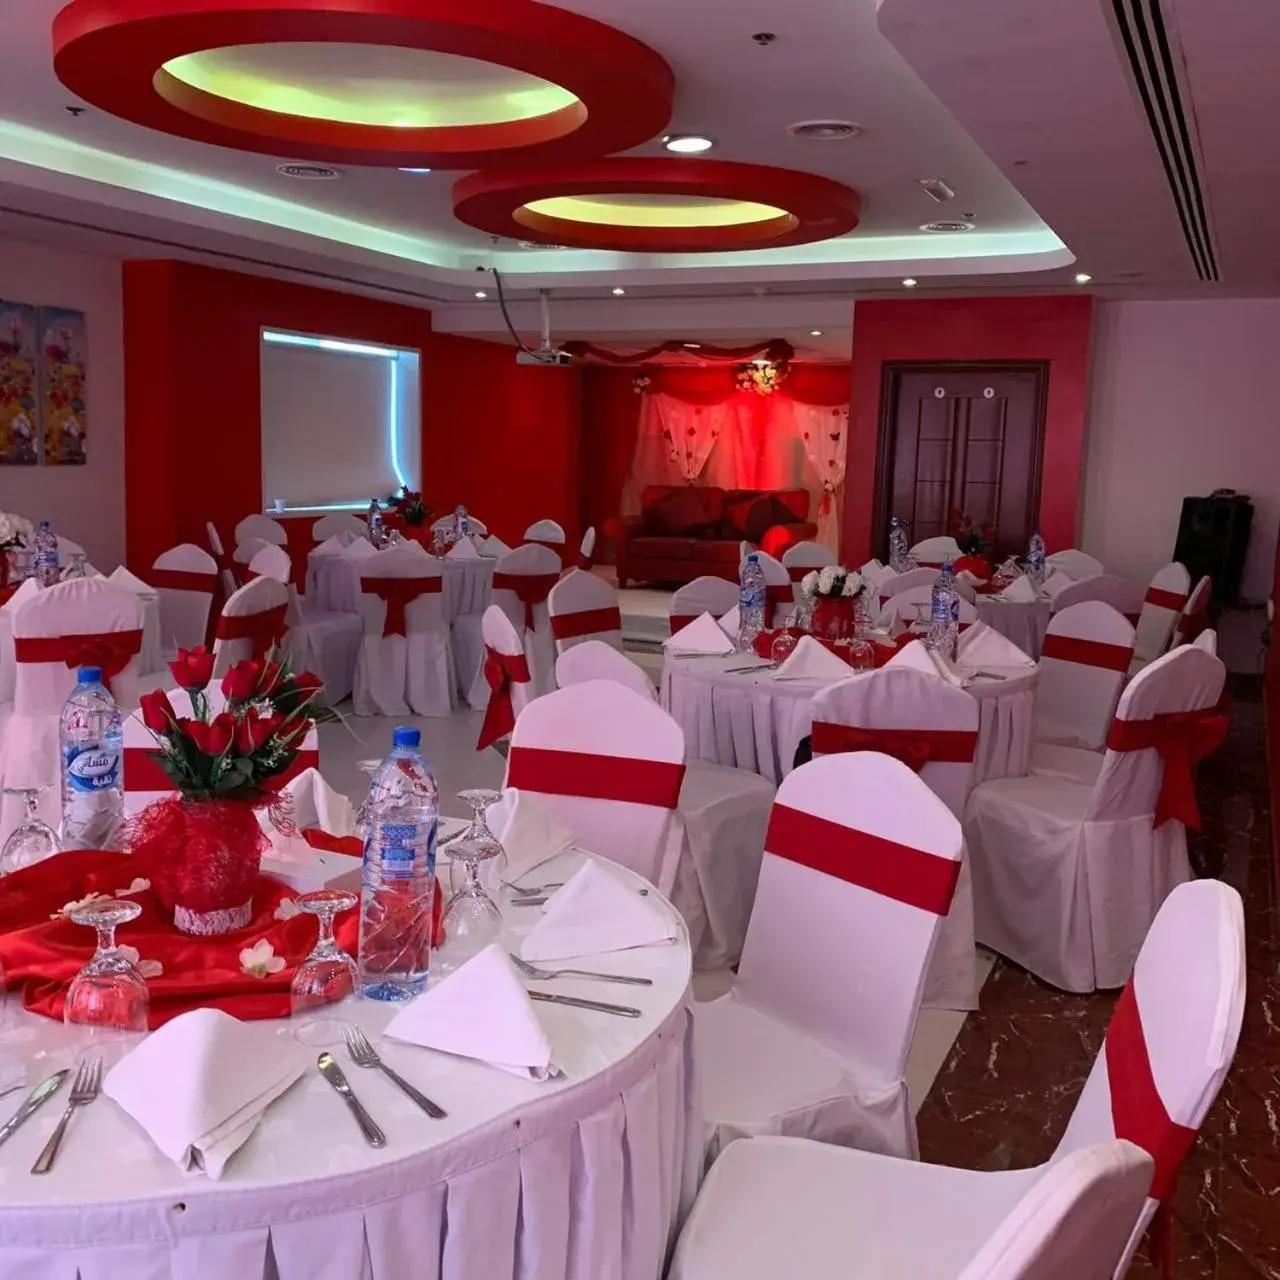 Banquet/Function facilities, Banquet Facilities in Hala Inn Hotel Apartments - BAITHANS